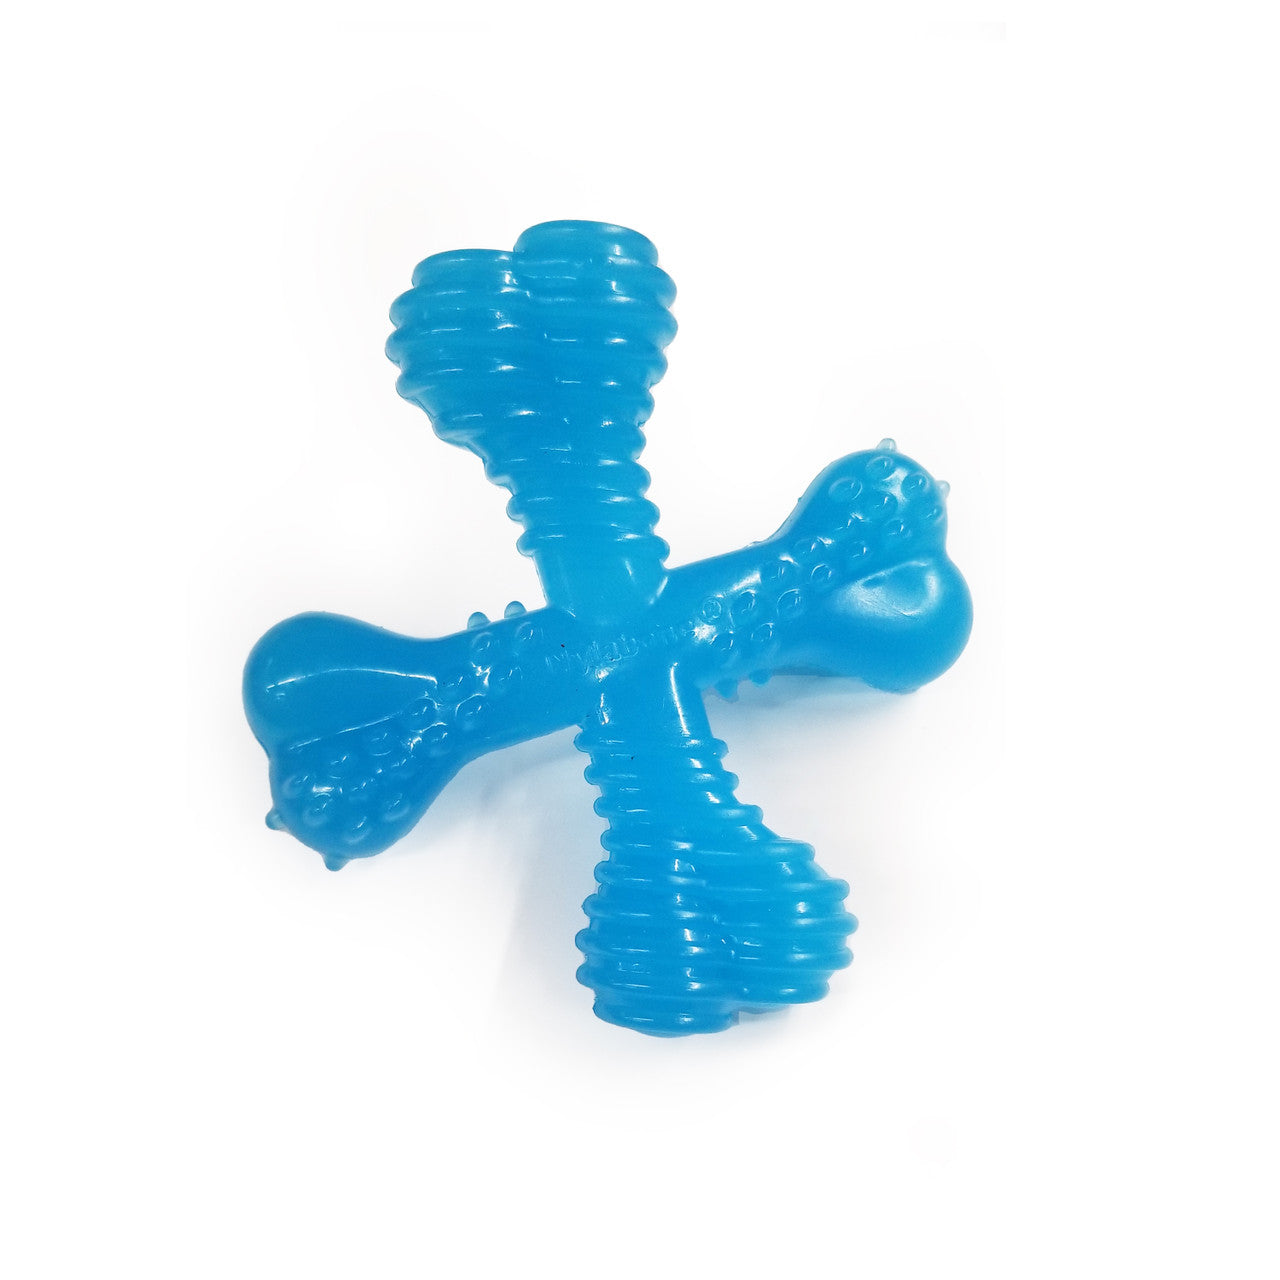 Nylabone Puppy Chew X Bone Chew Toy Small/Regular (1 Count)